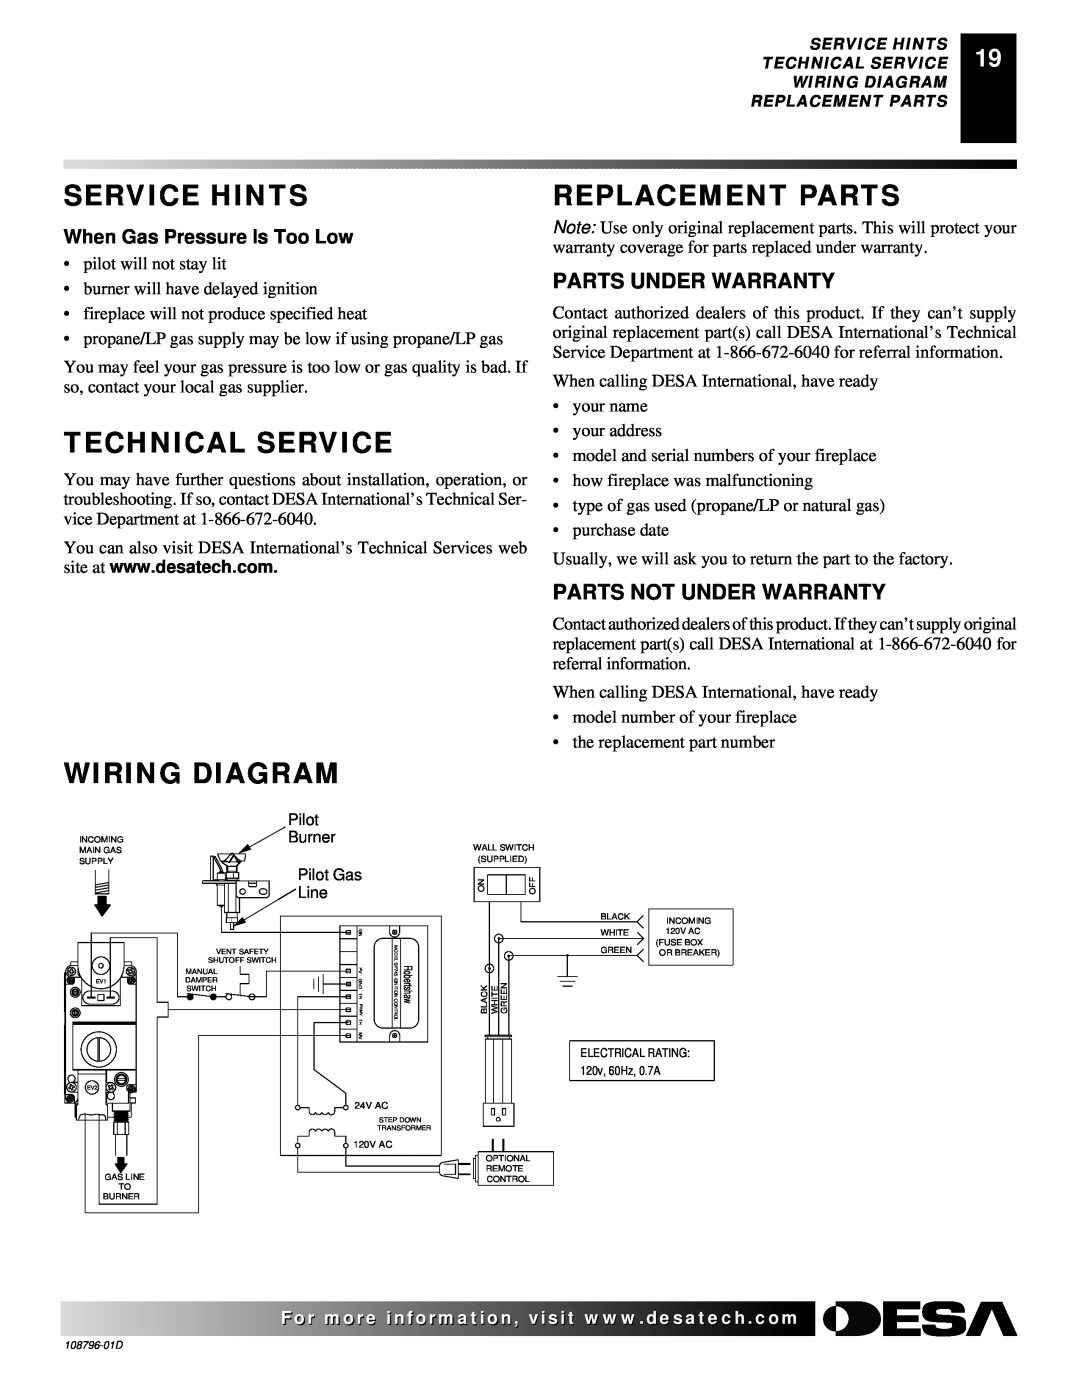 Desa M36E, M42E, VM36E, VM42E Service Hints, Technical Service, Wiring Diagram, Replacement Parts, Parts Under Warranty 